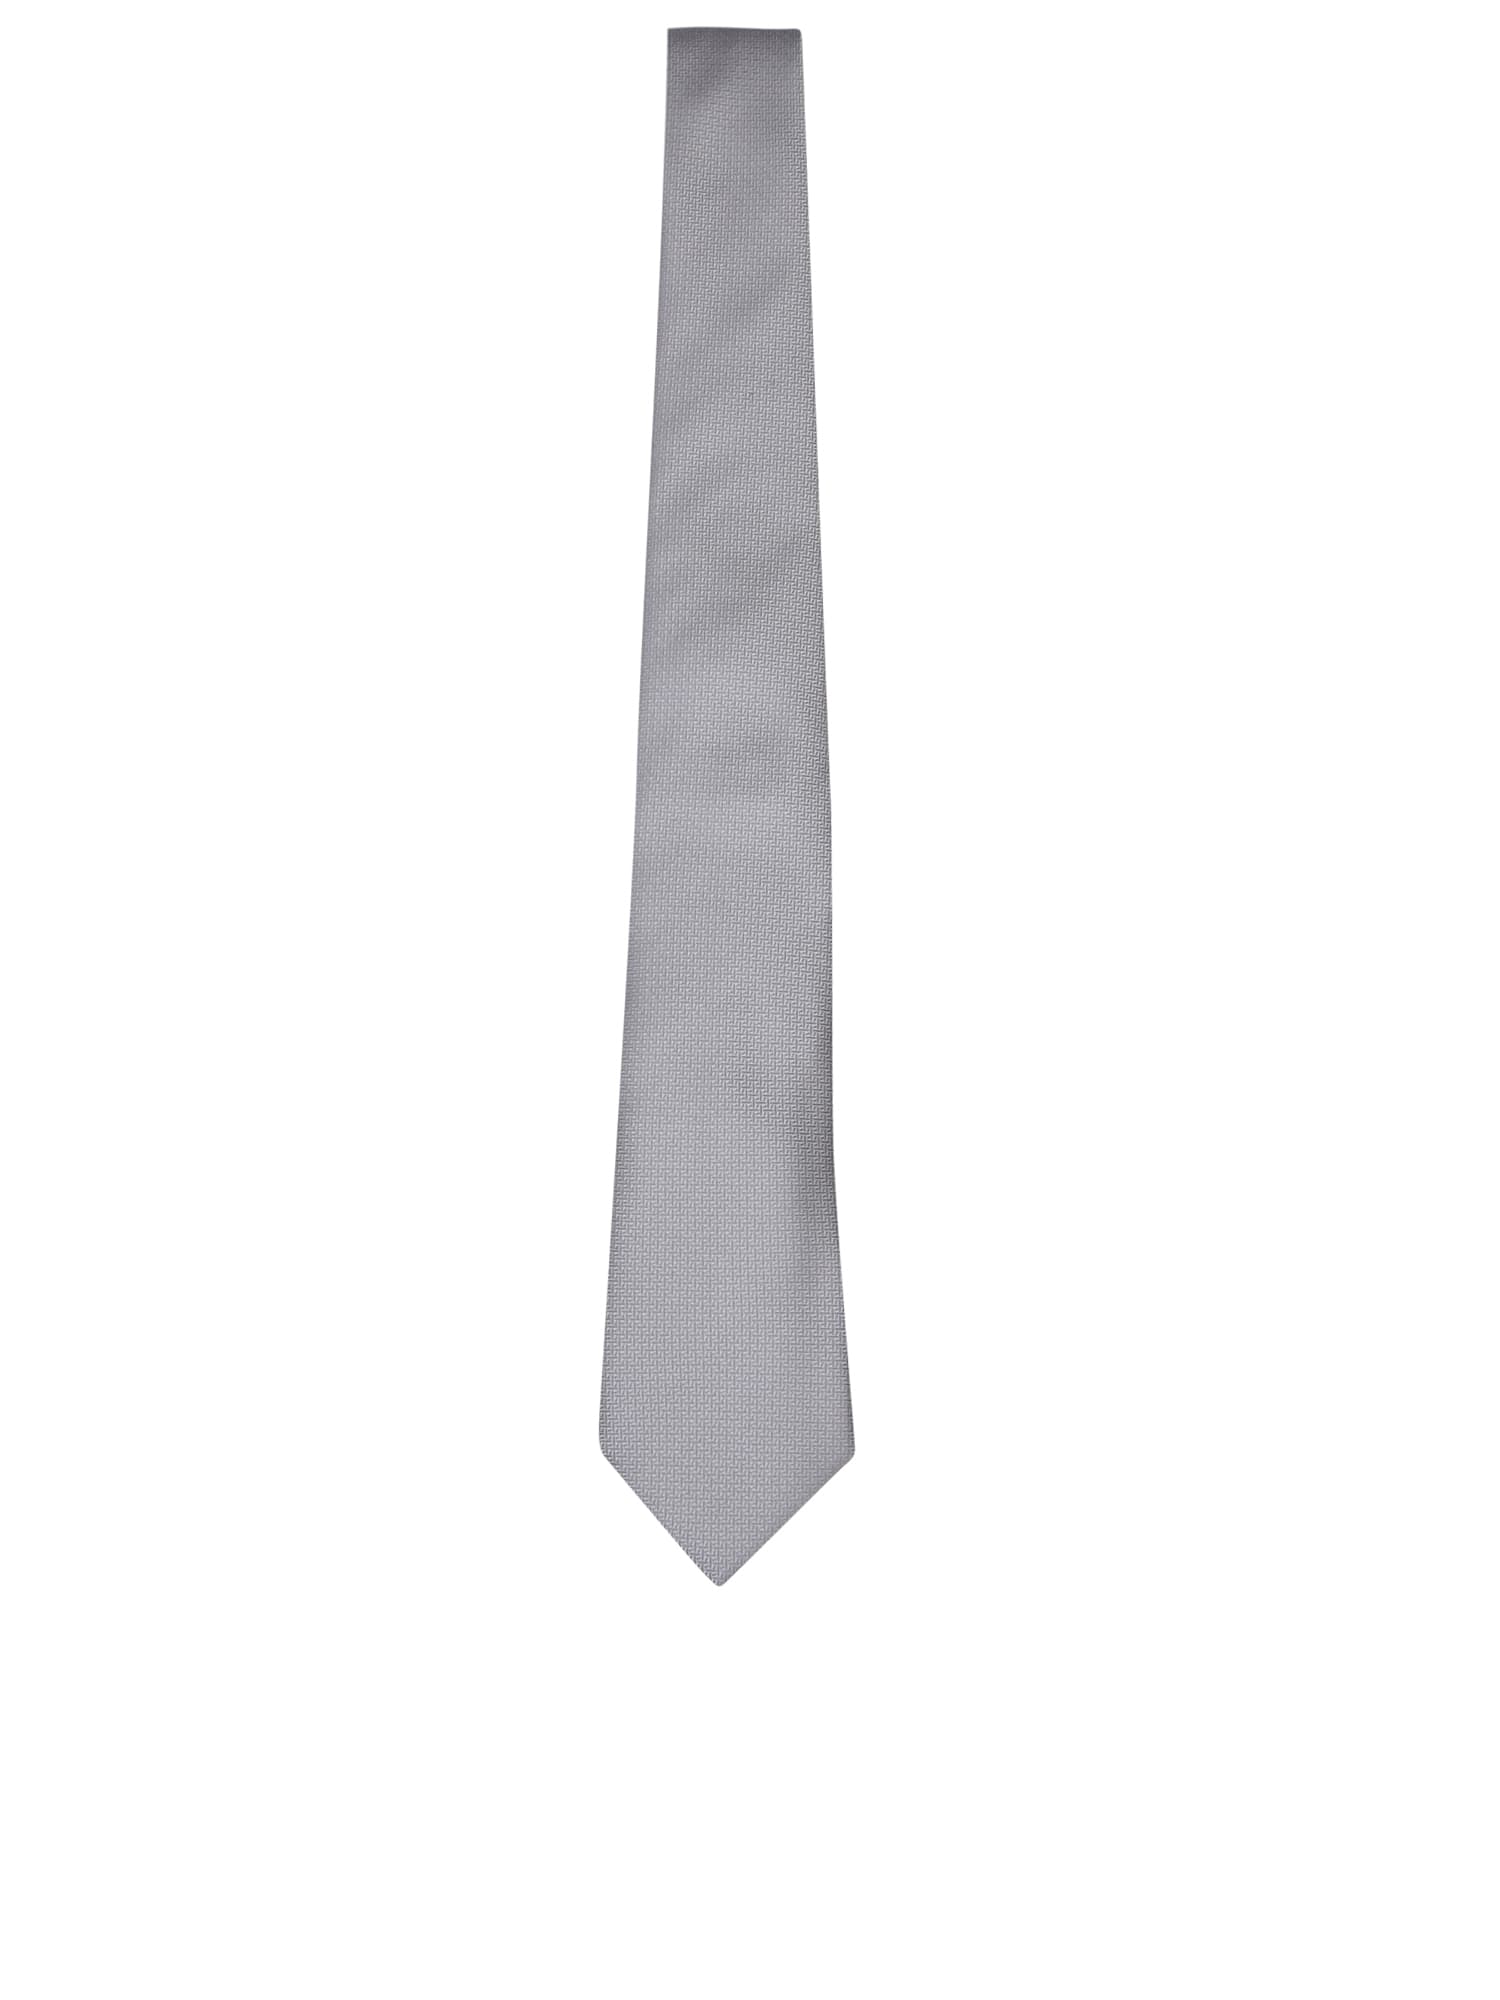 Shop Canali Micropattern Pearl Grey Tie